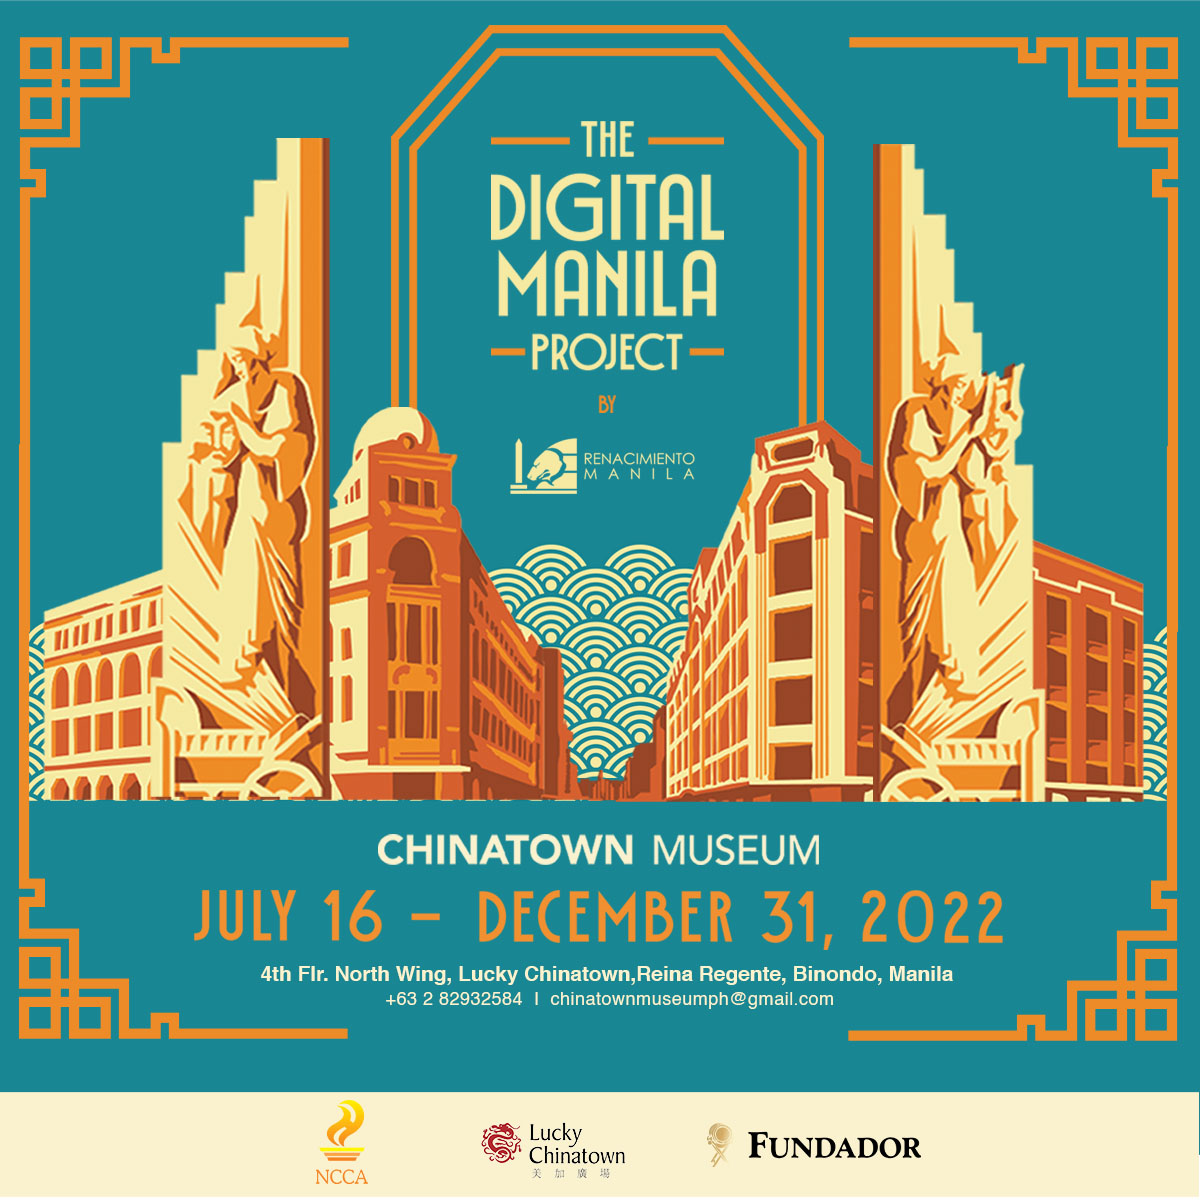 The Digital Manila Project will run until December 31, 2022.